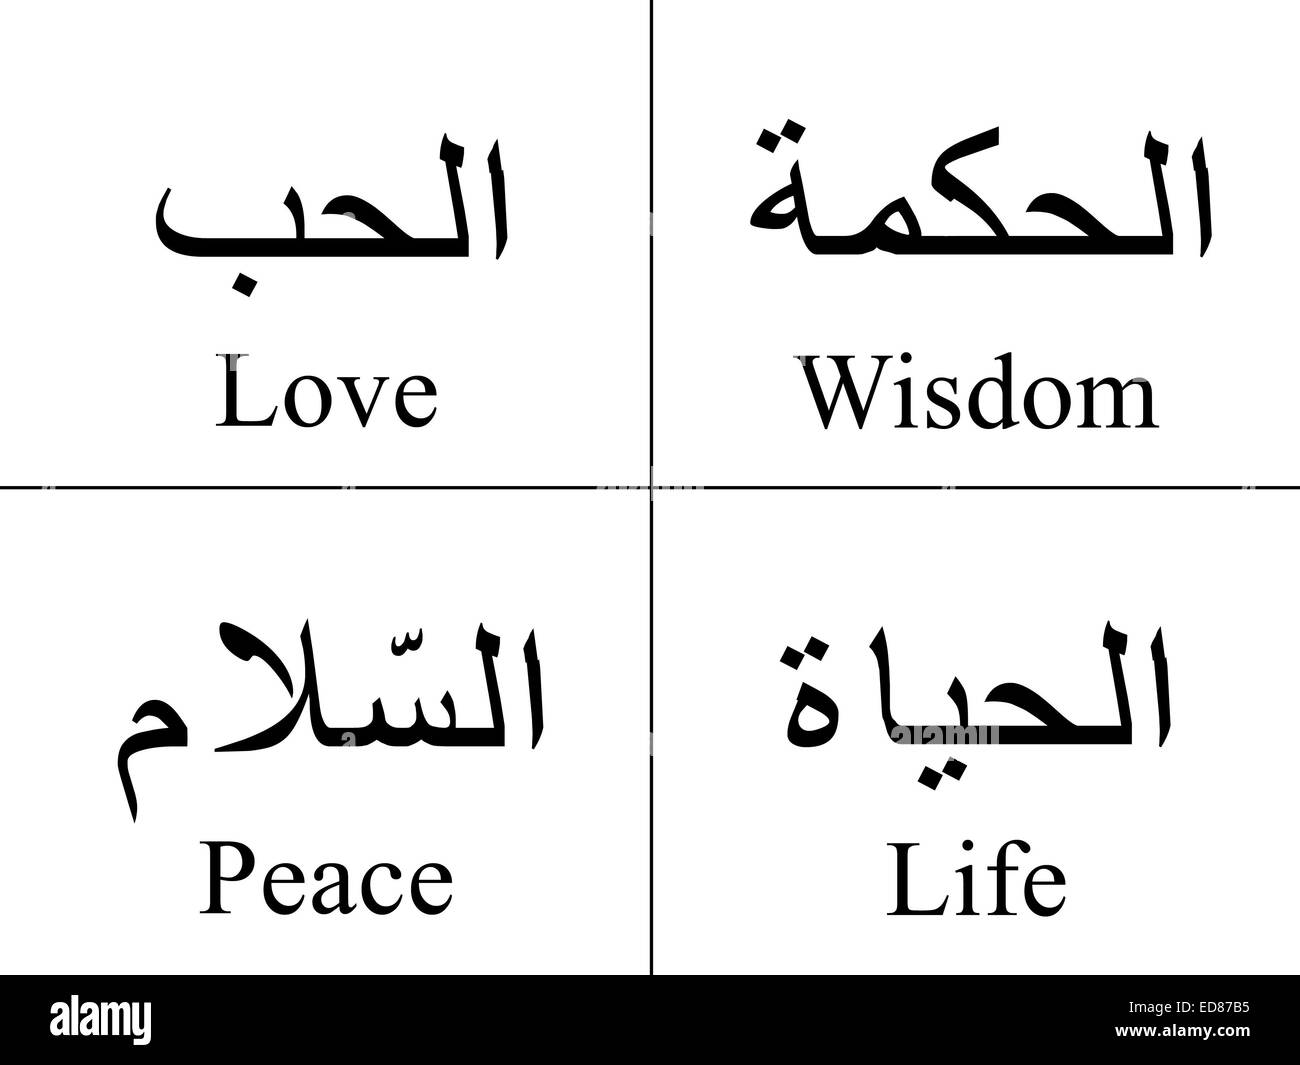 In Arabic Language